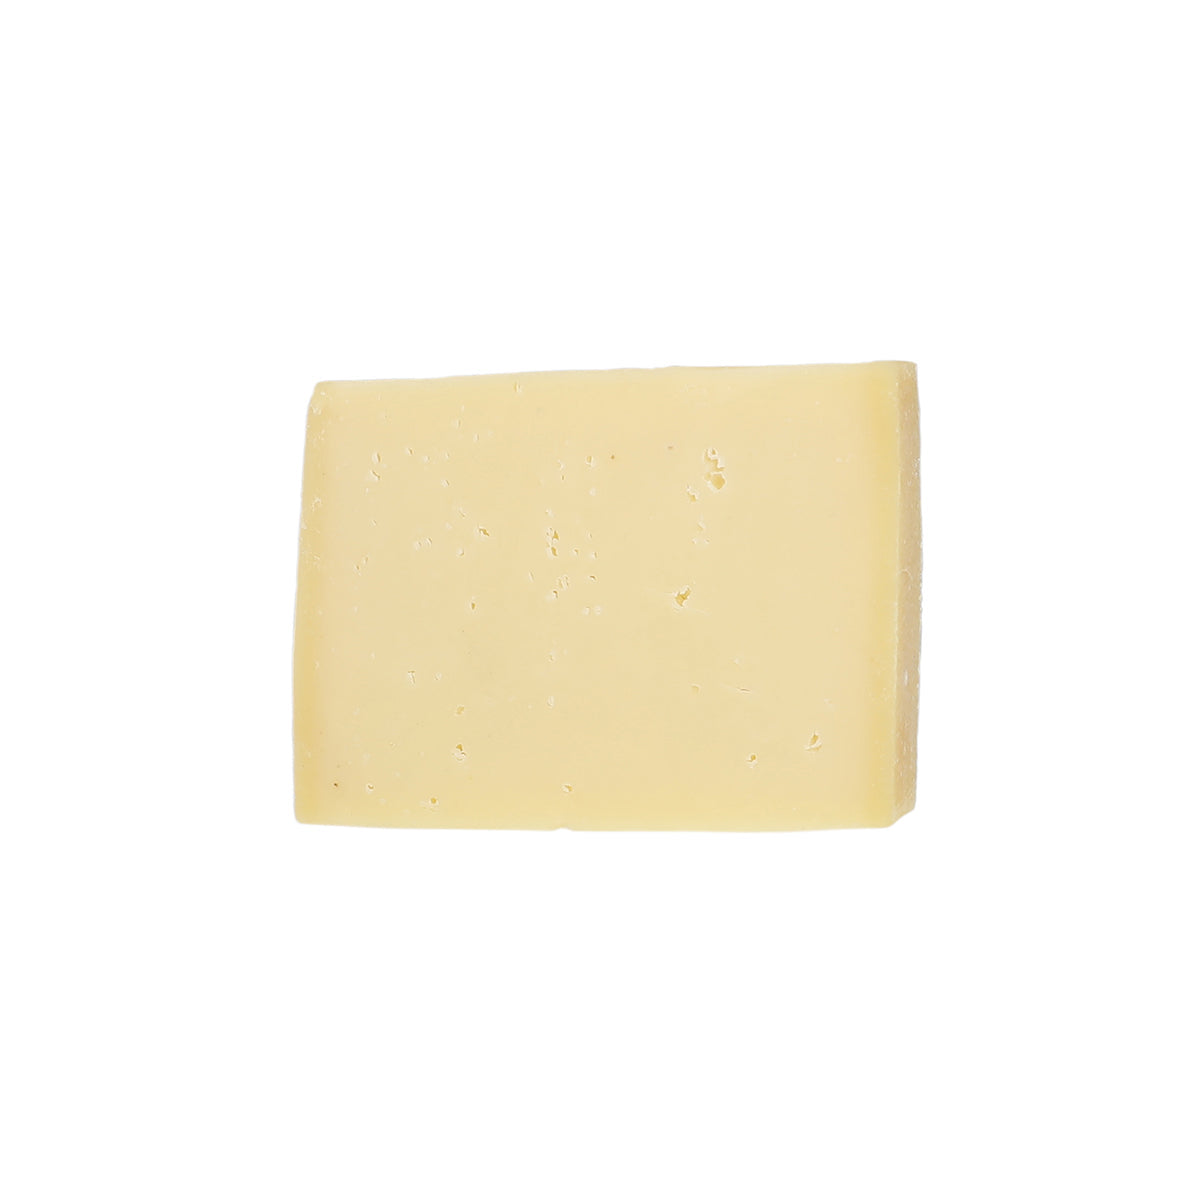 Austrian Alps Austrian Block Gruyere Cheese